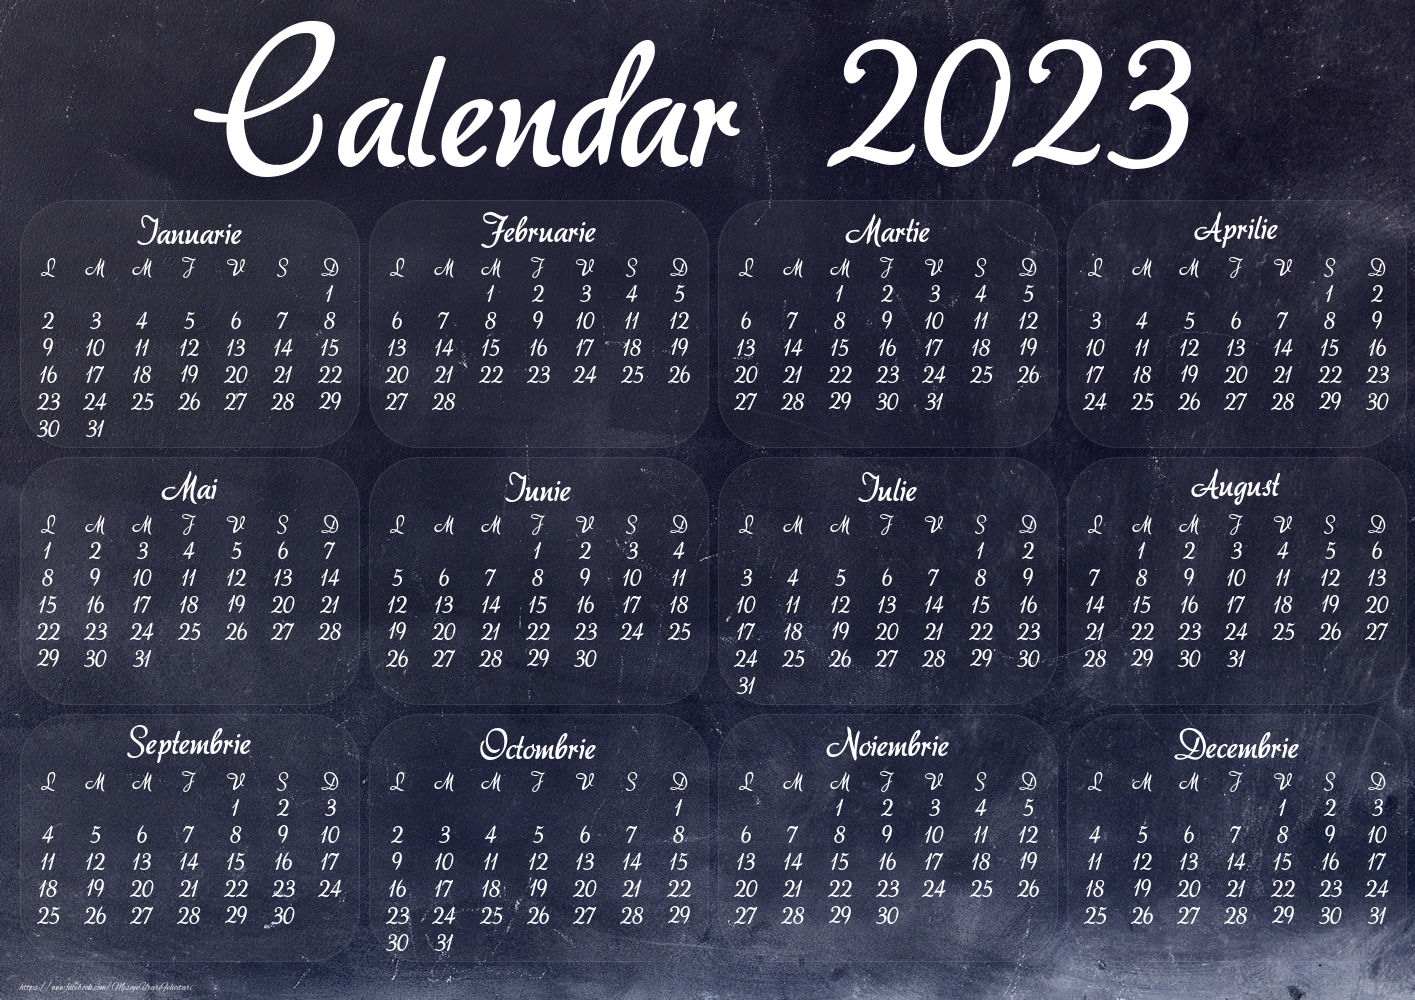 Calendare Calendar 2023 - Black - Model 0034